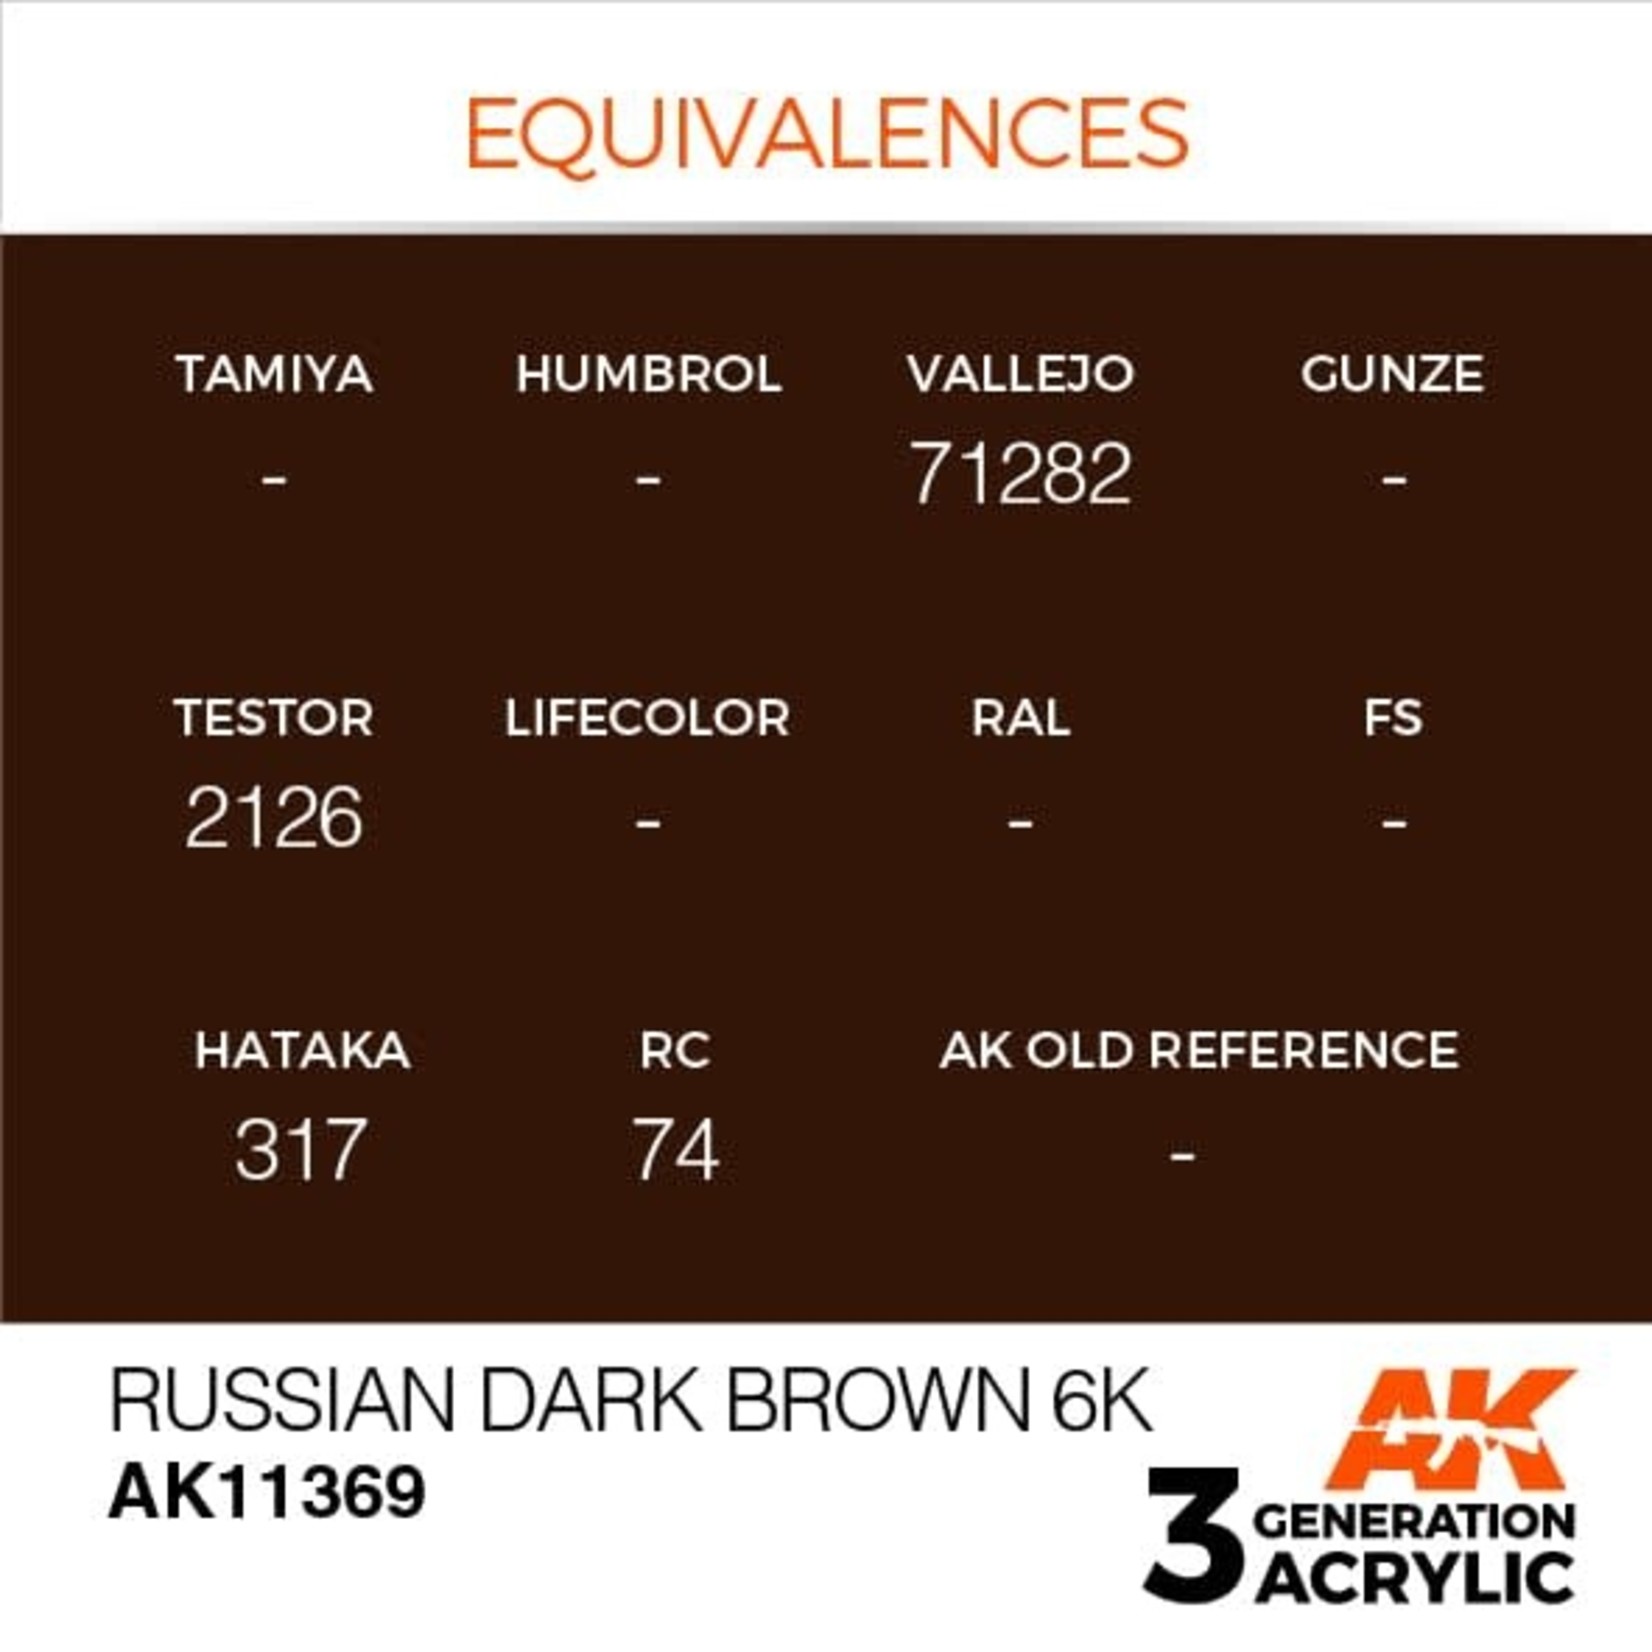 AK Interactive AK11369 3G AFV Russian Dark Brown 6K 17ml